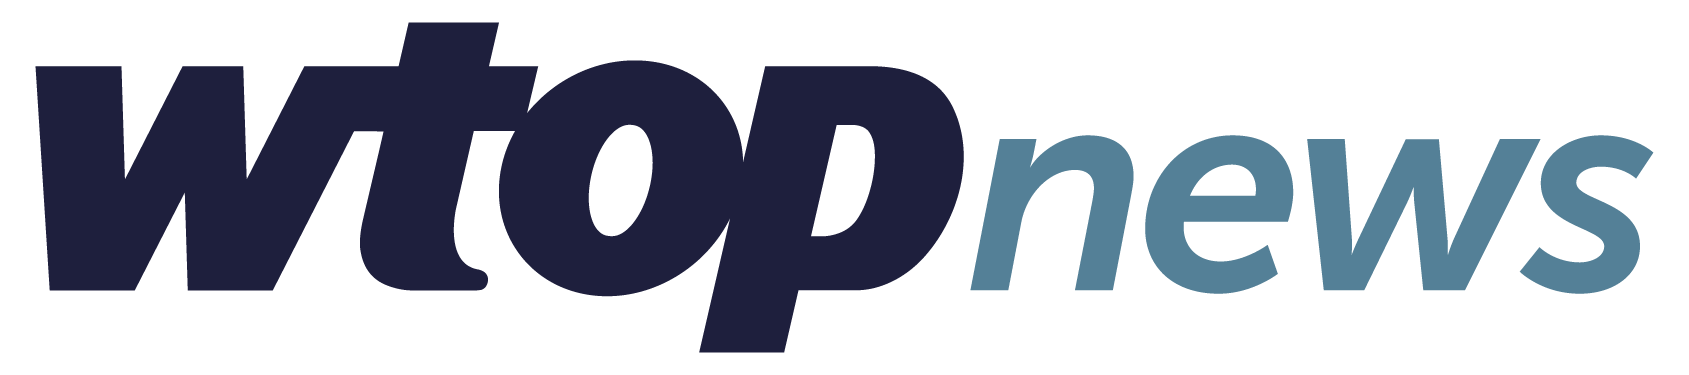 WTOP News Logo HORIZONTAL Trans COLOR.png